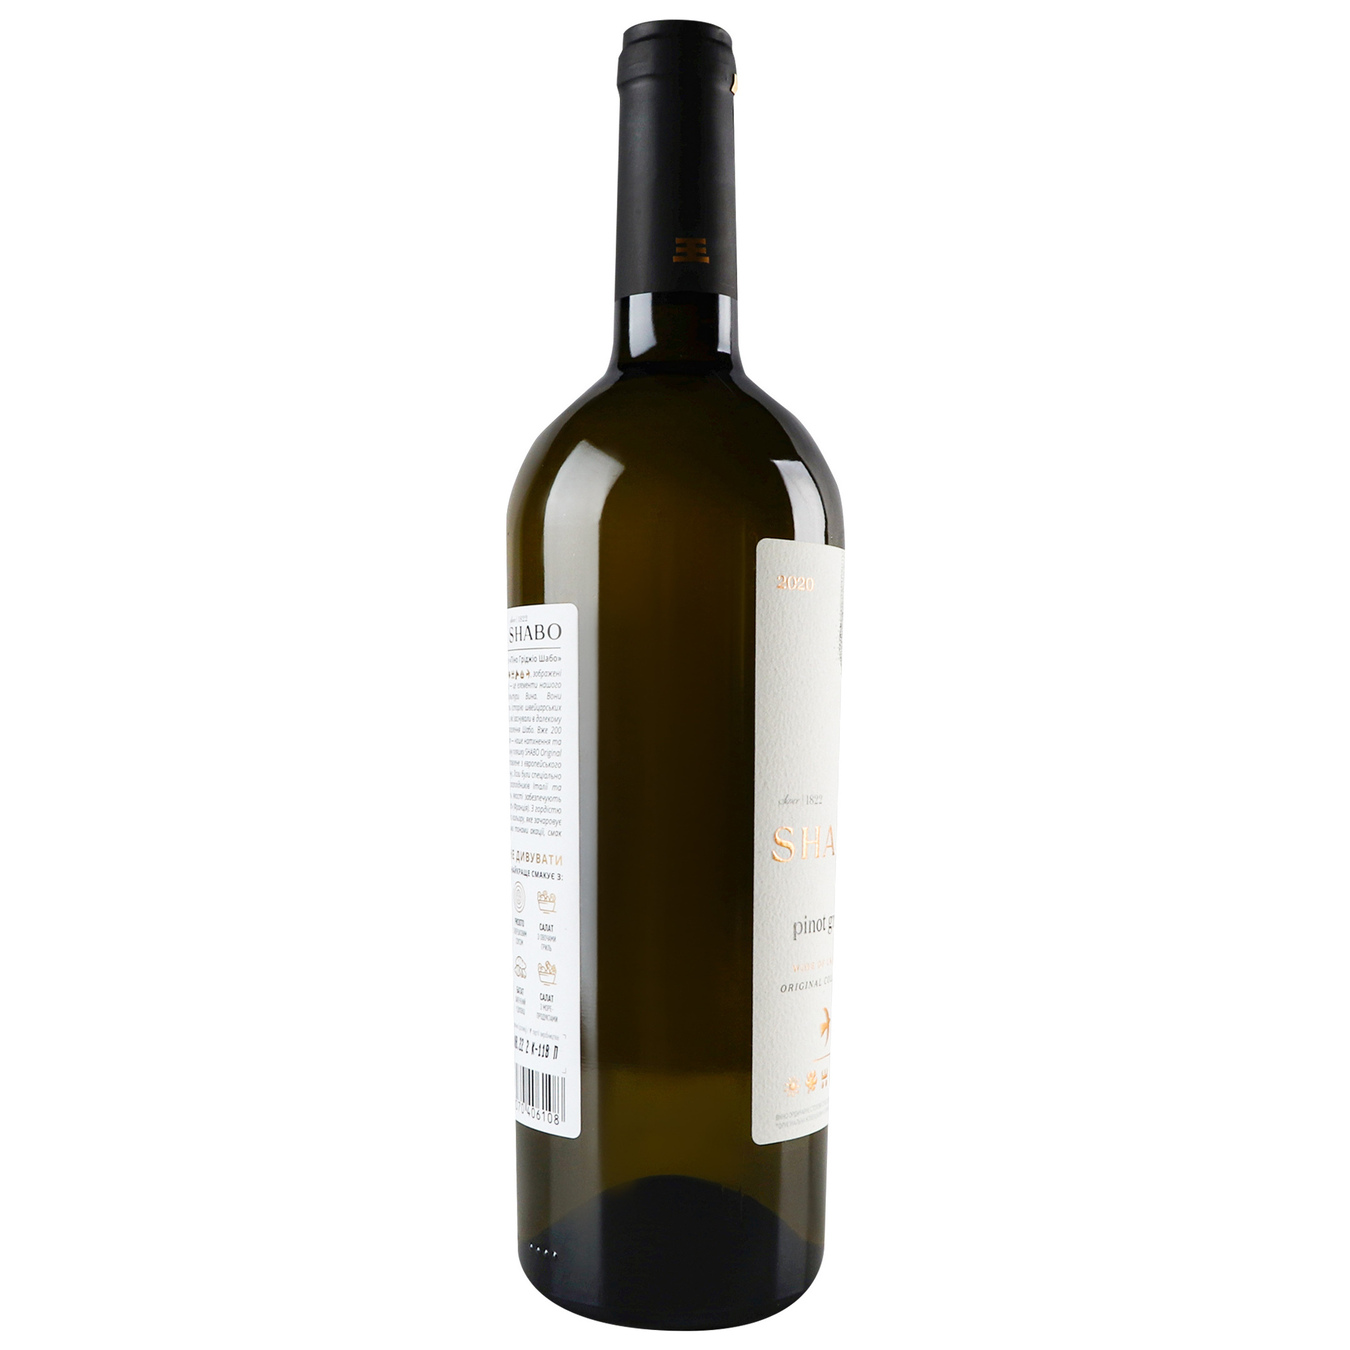 Wine Shabo Pinot Grigio white dry 12.1% 0.75 l 5